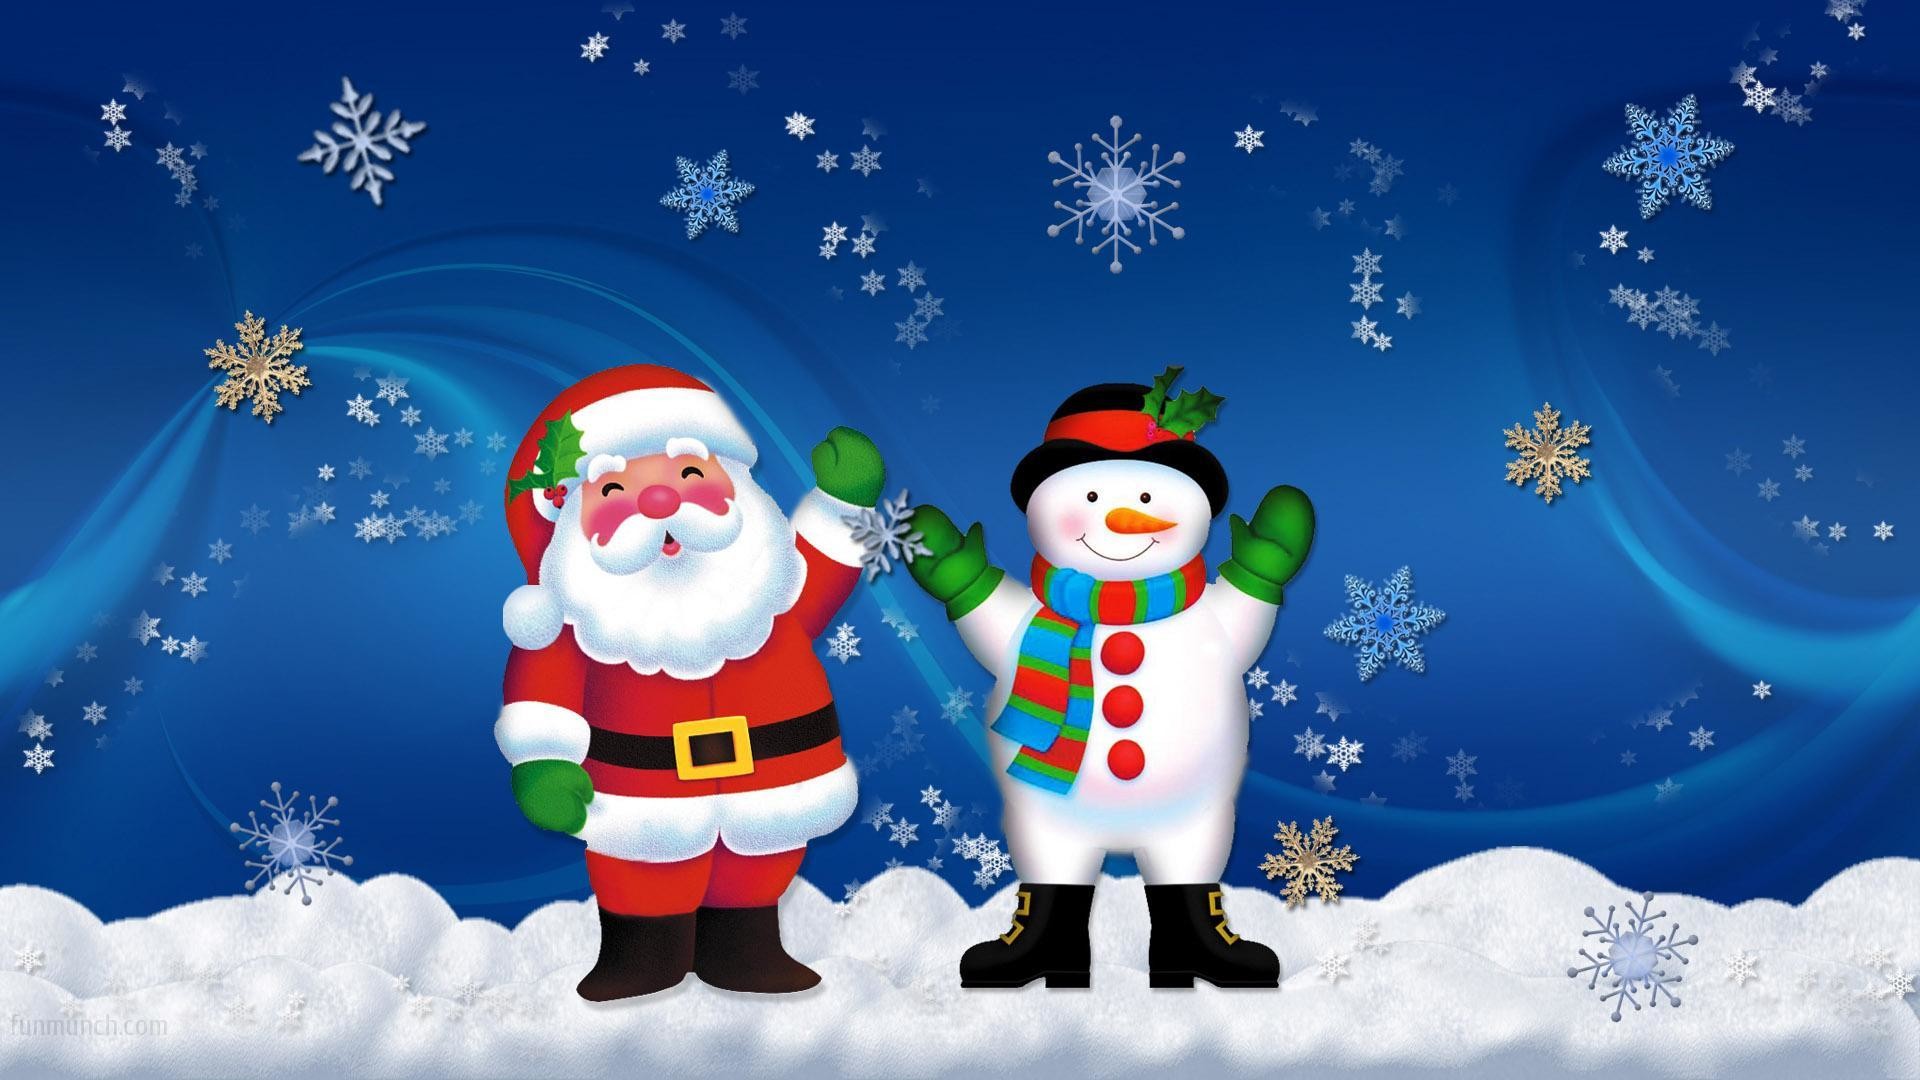 Christmas Desktop Backgrounds, wallpaper, Animated Christmas Desktop